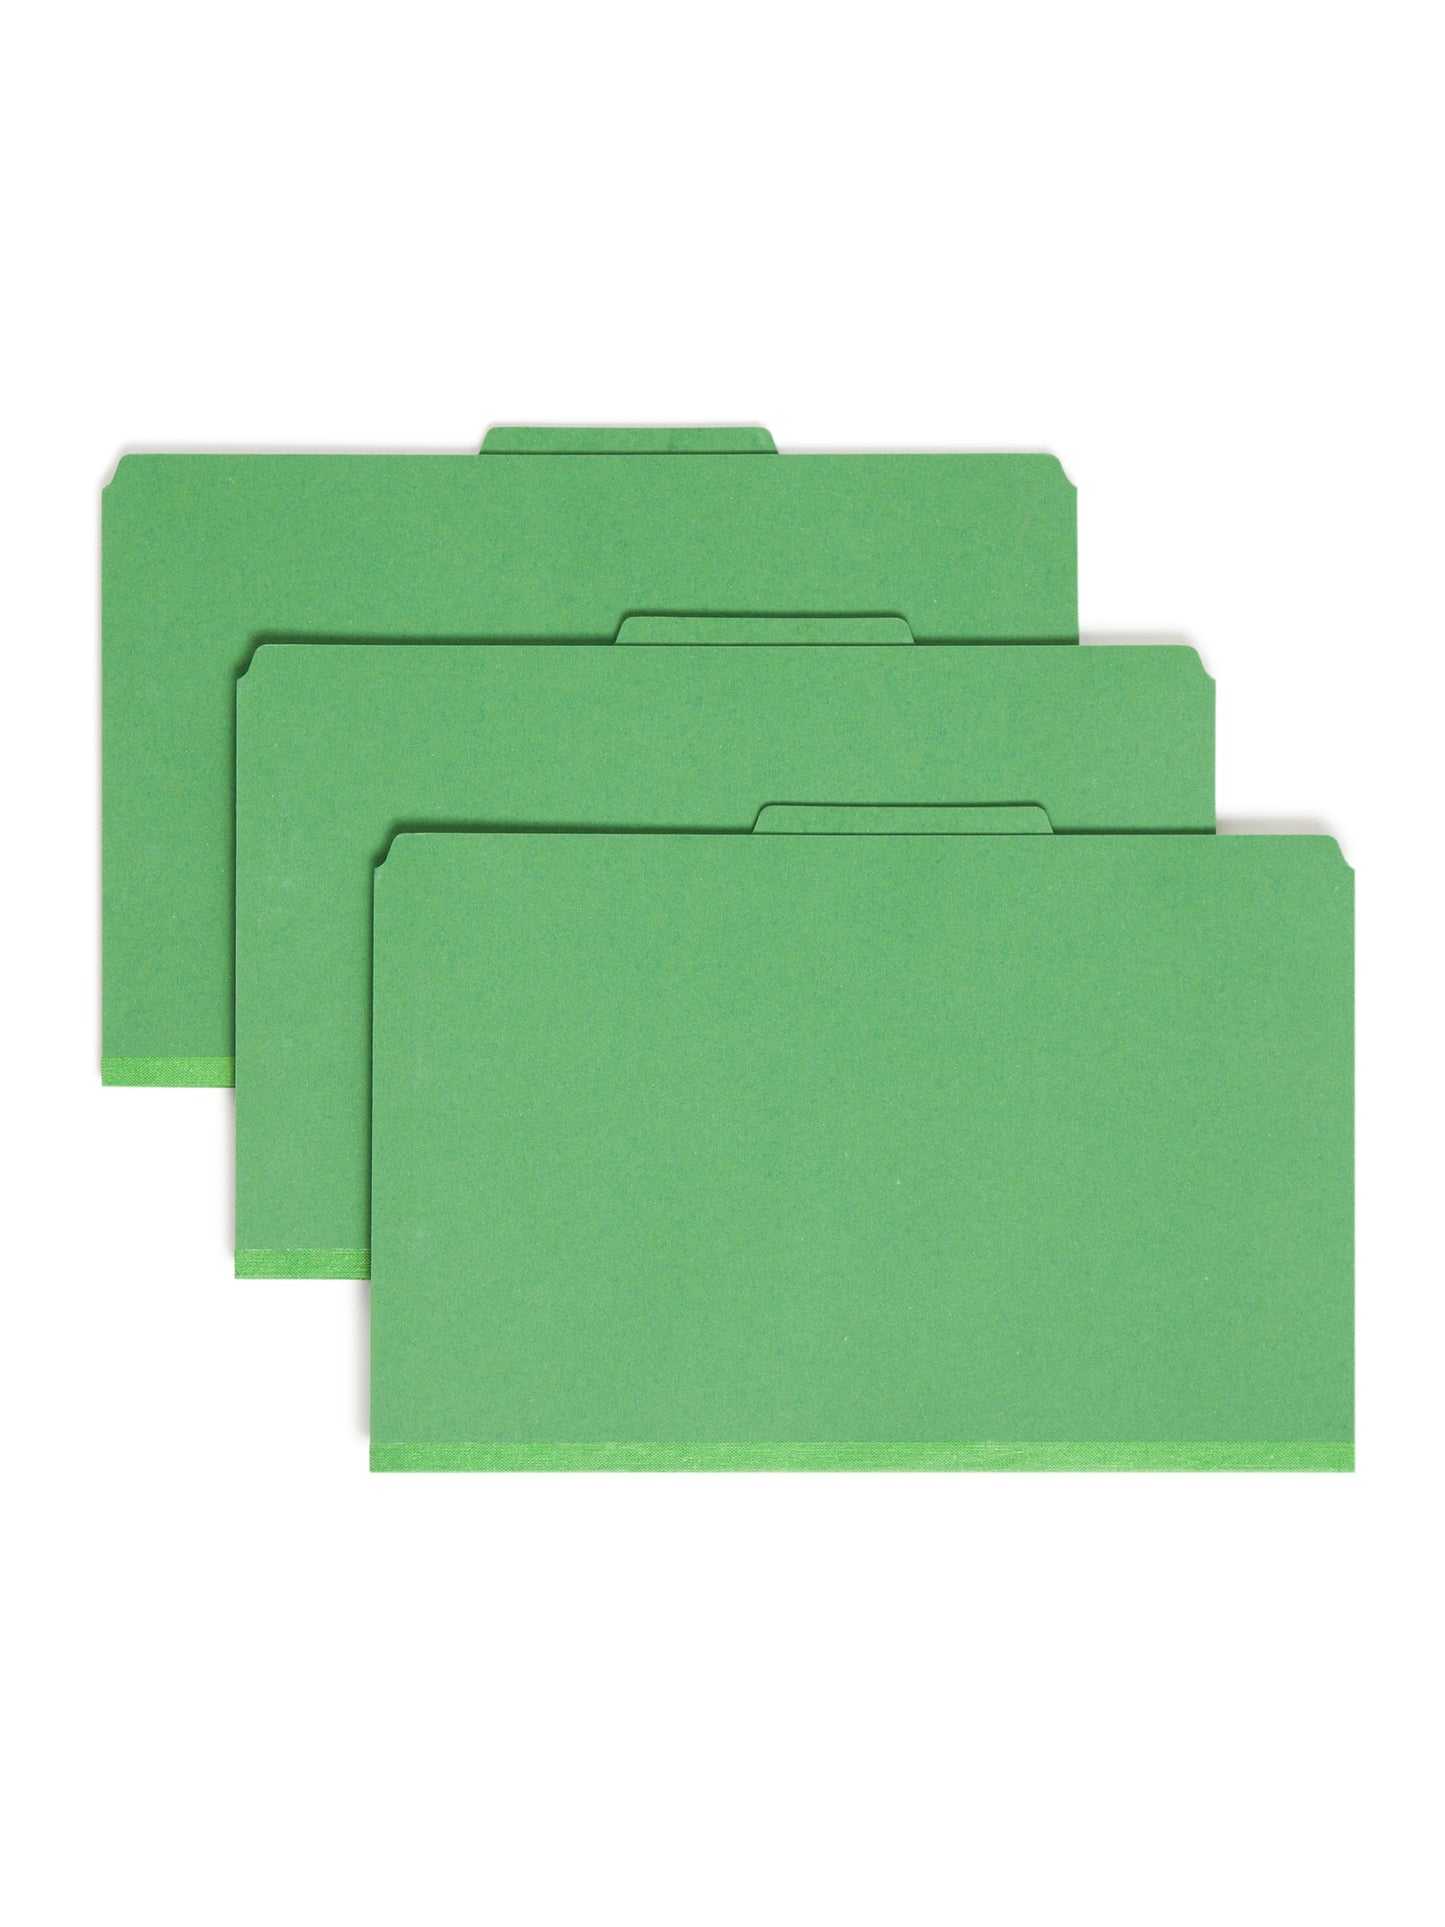 SafeSHIELD® Pressboard Classification File Folders, 1 Divider, 2 inch Expansion, Green Color, Legal Size, Set of 0, 30086486187337